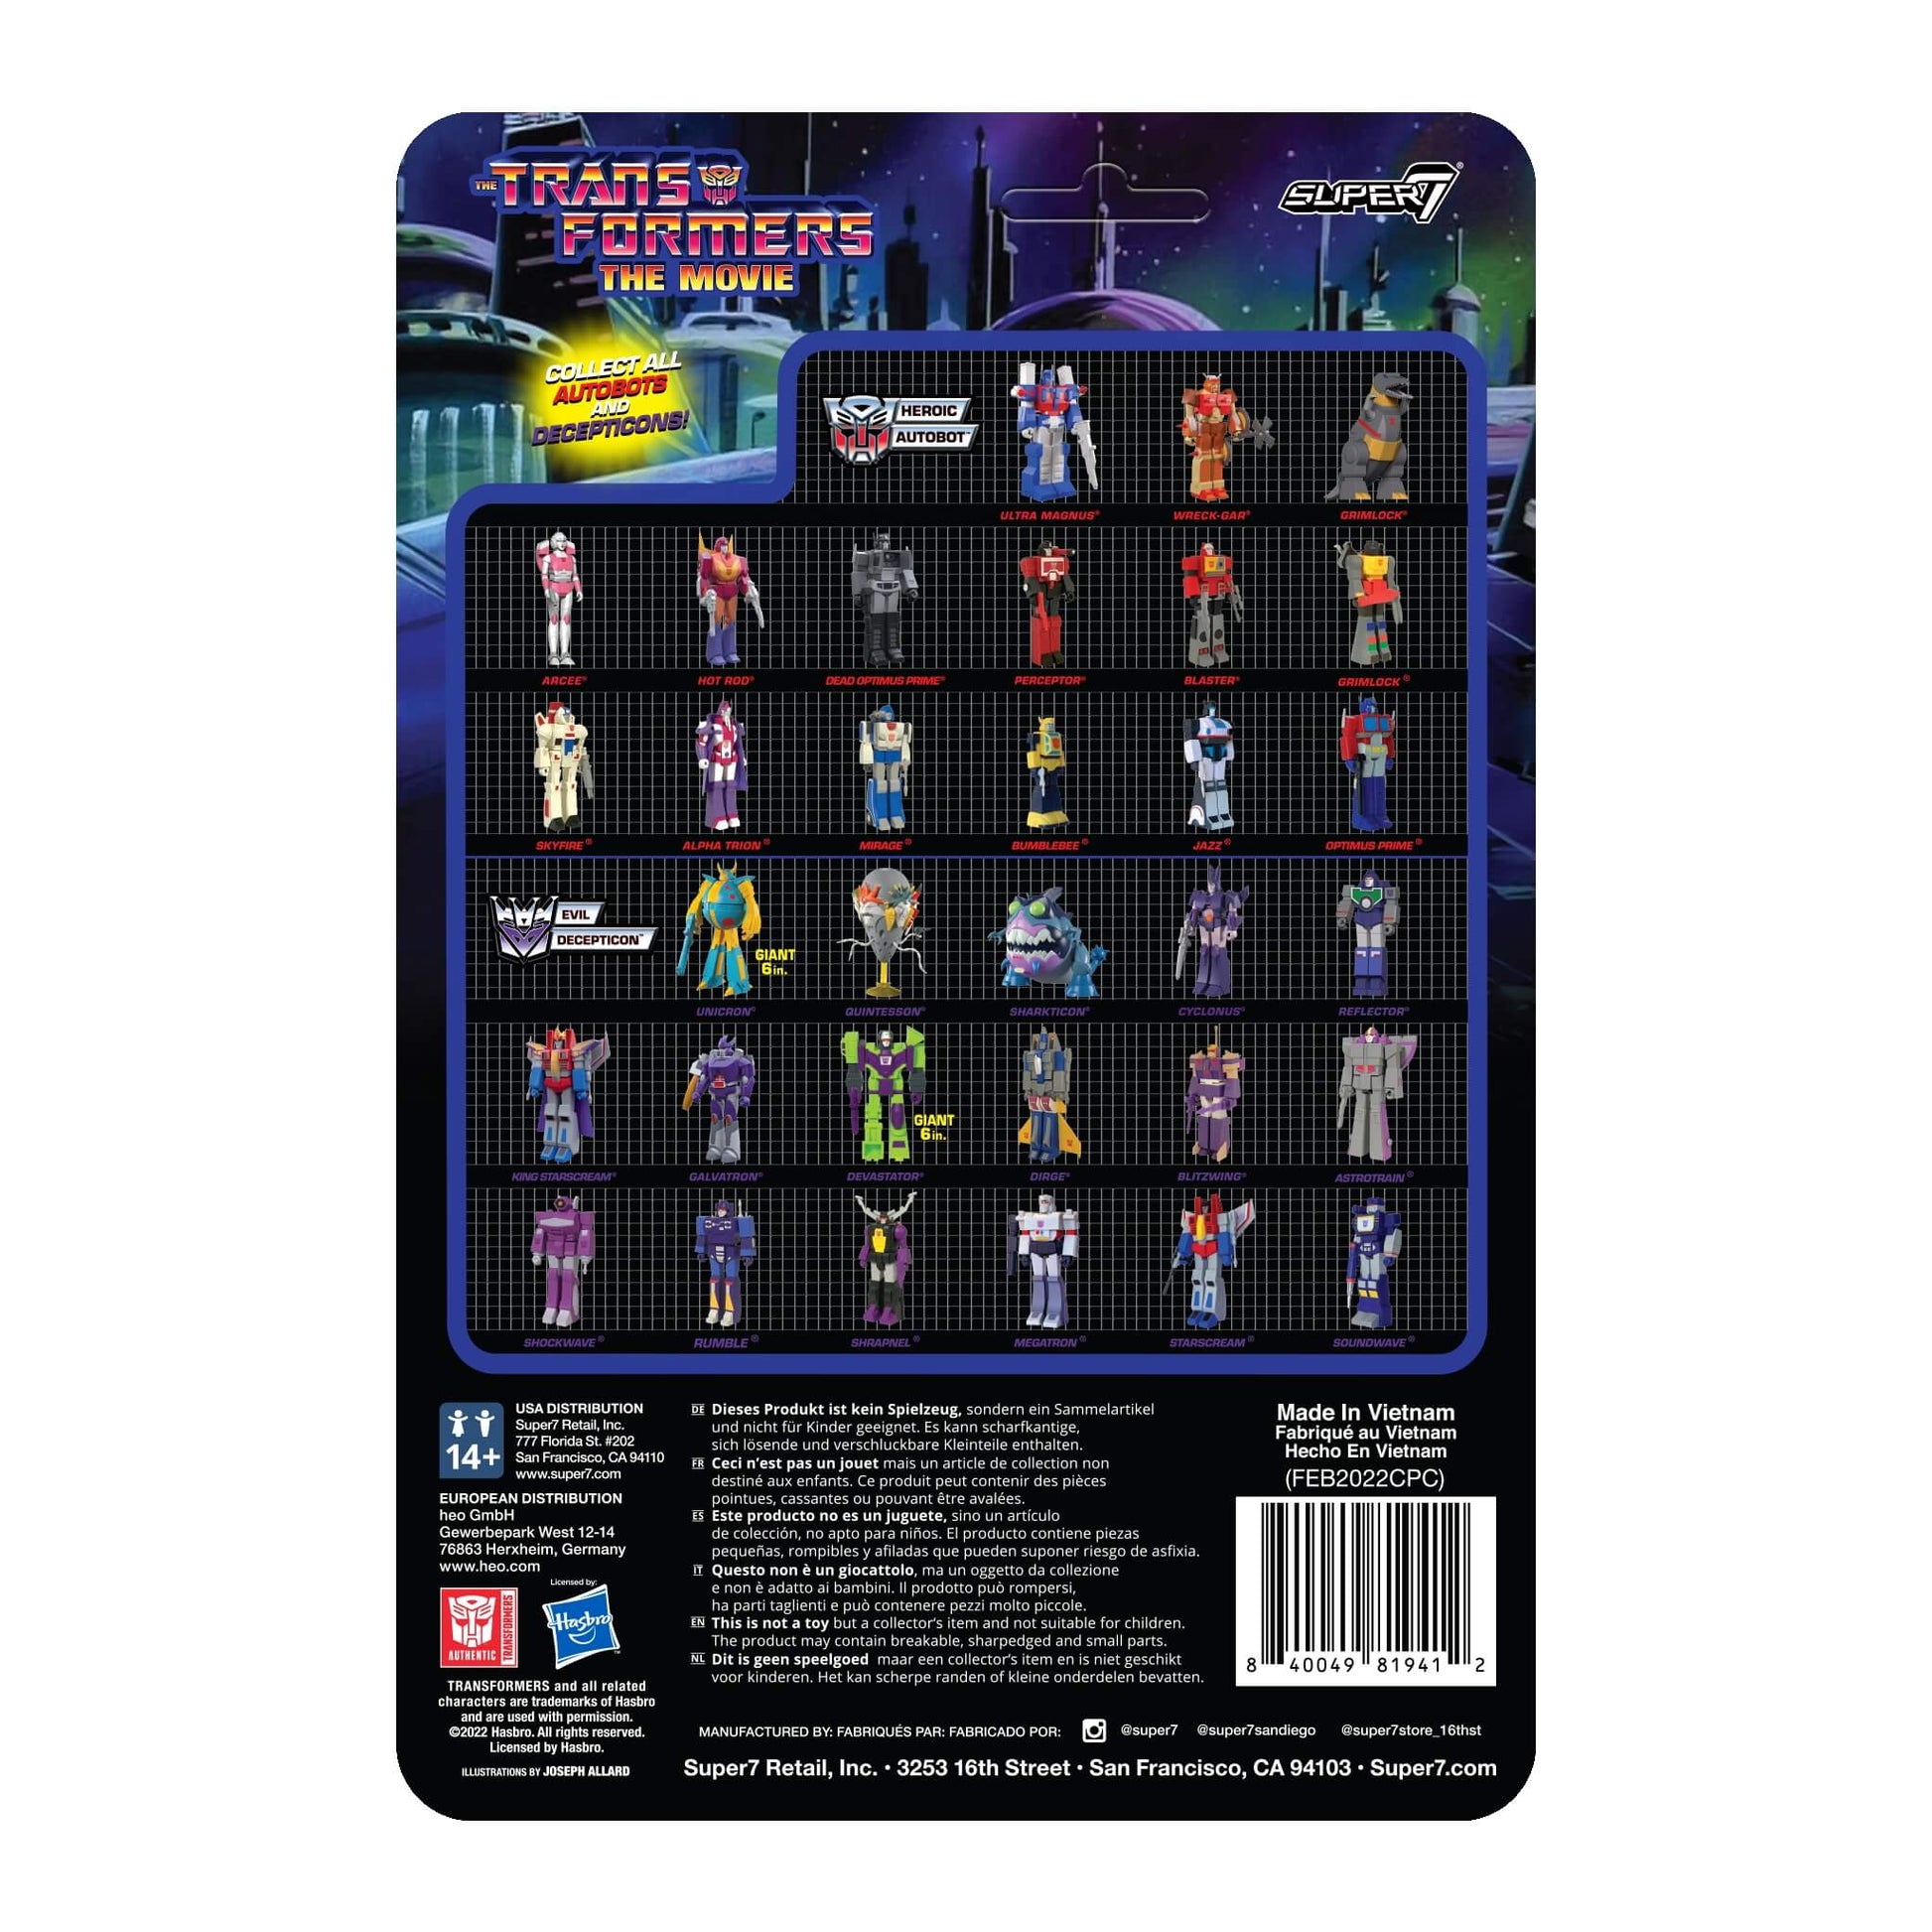 Super7 Transformers The Movie ReAction Figure Wave 6 - Sharkticon (G1) PRE-ORDER